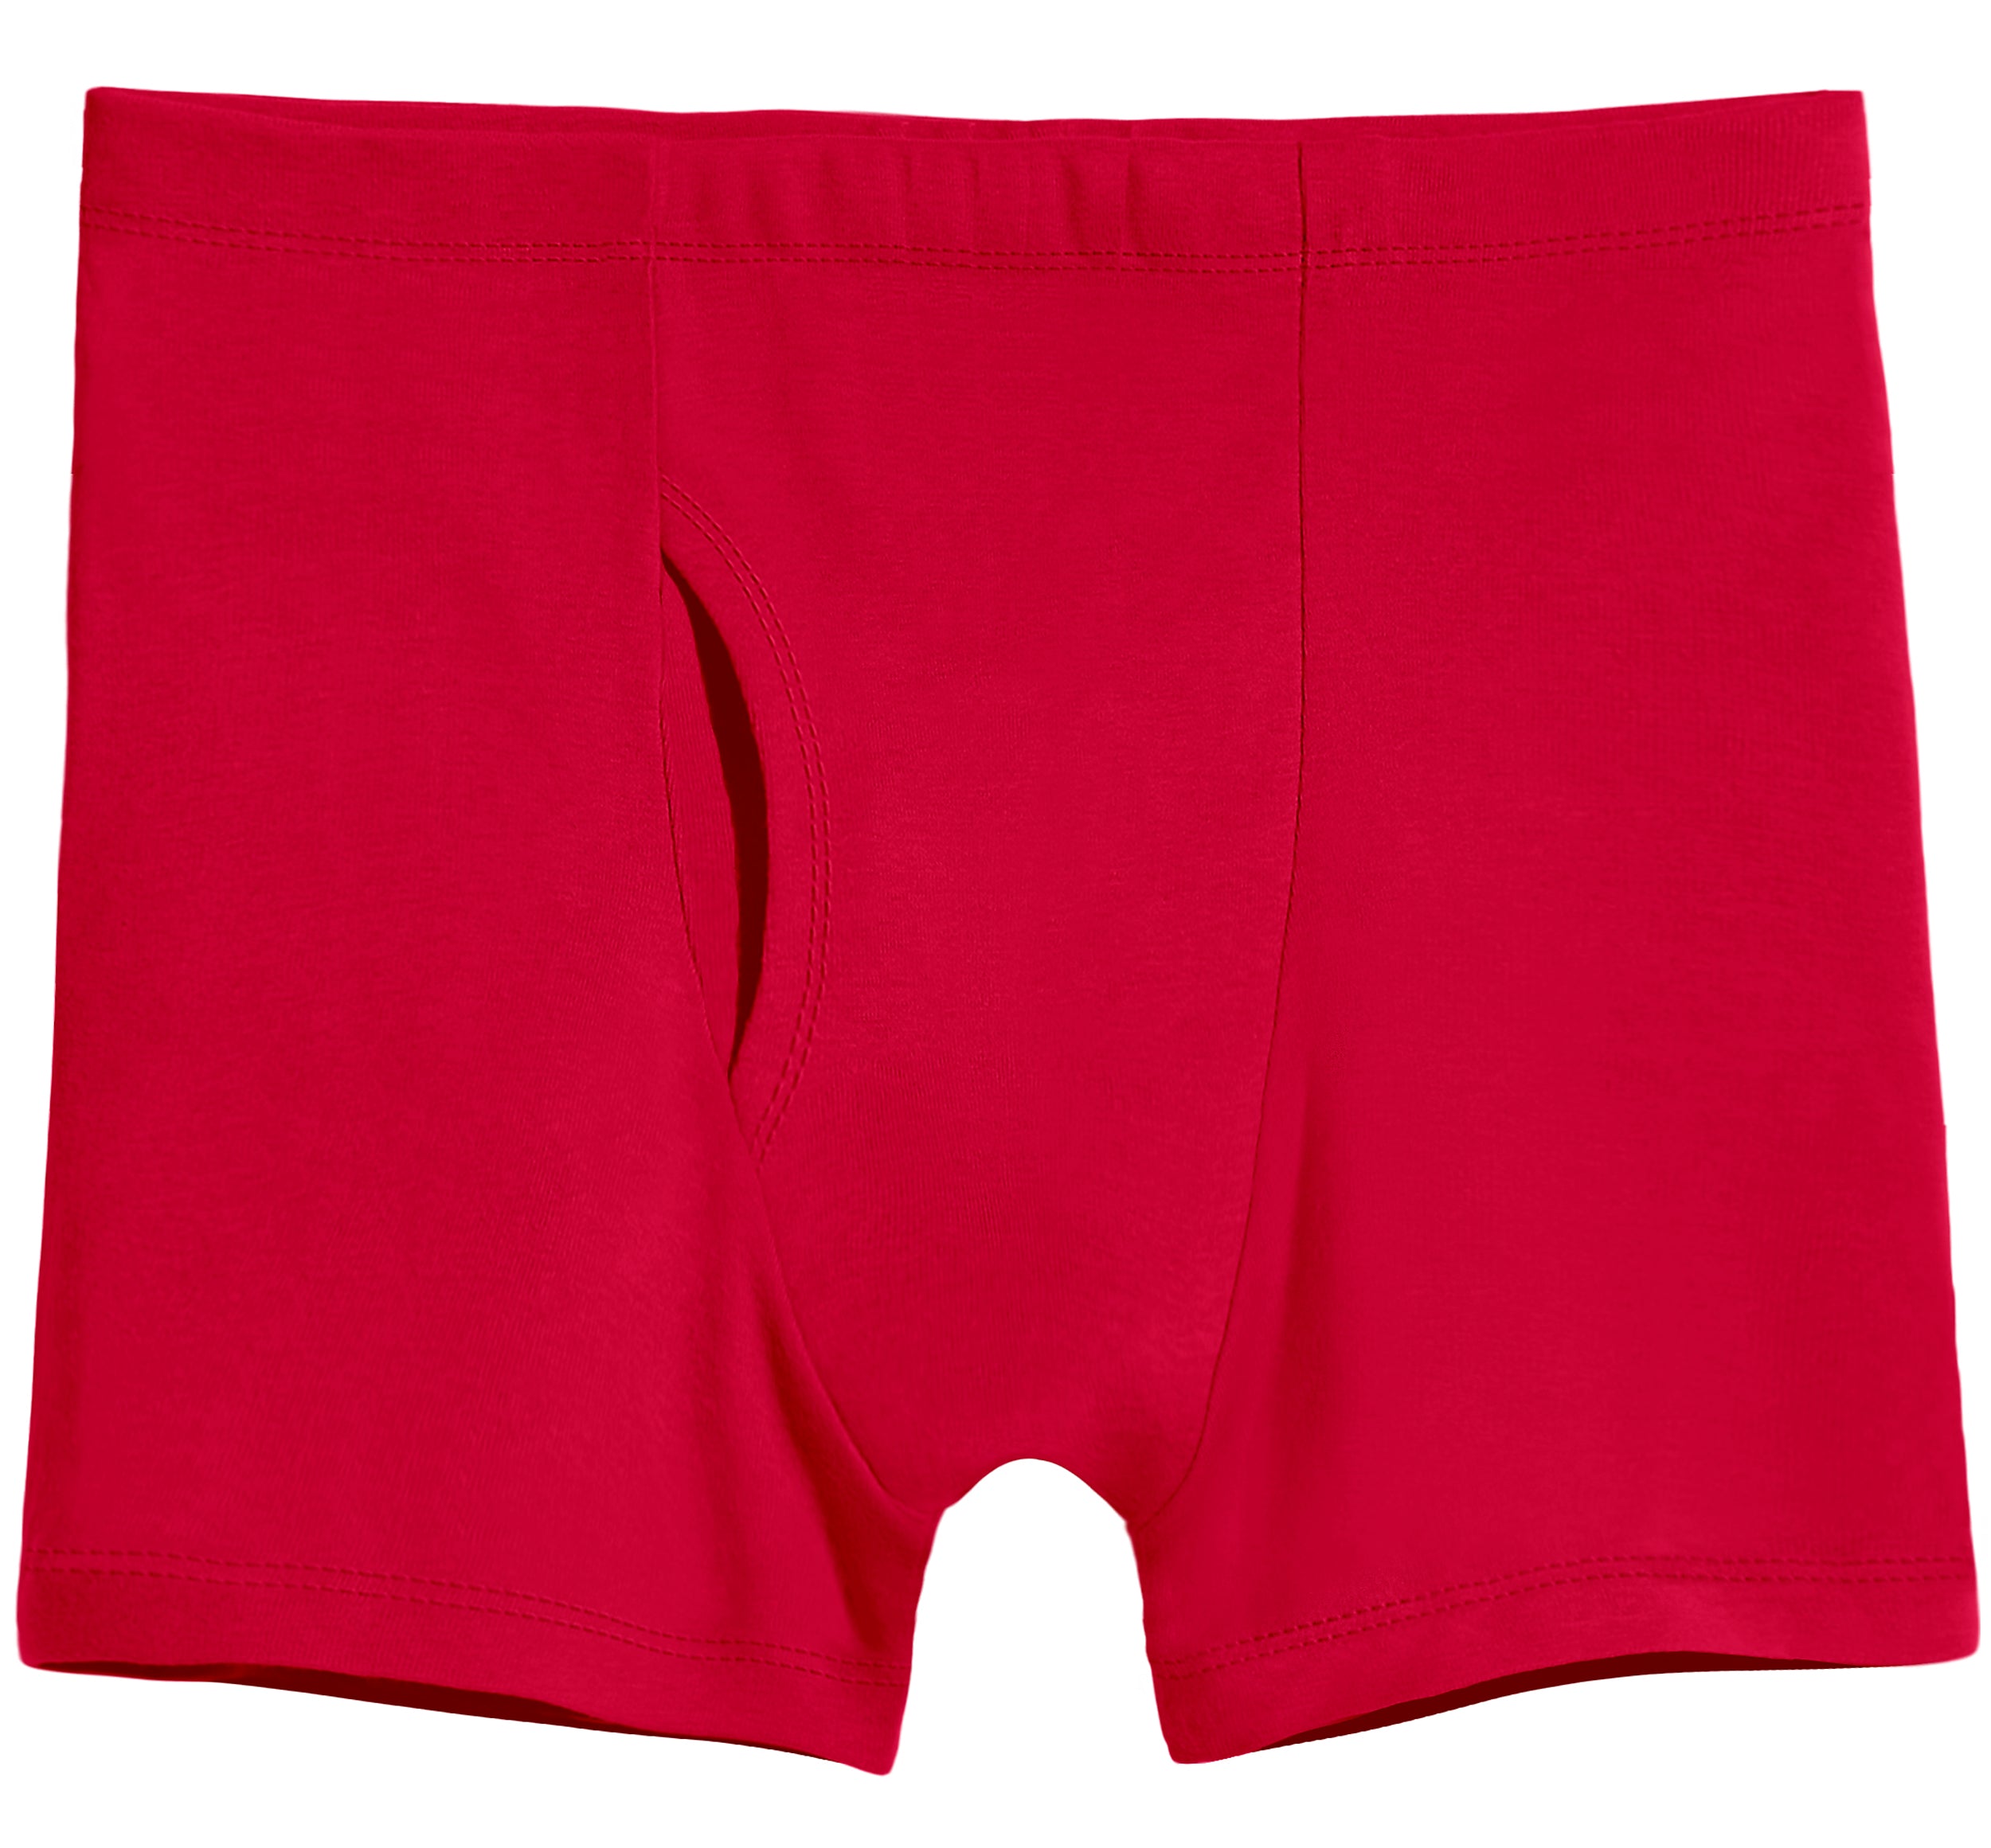 Red Cotton Comfort Boxer For Men - COTTON MEGA STORE خصومات على